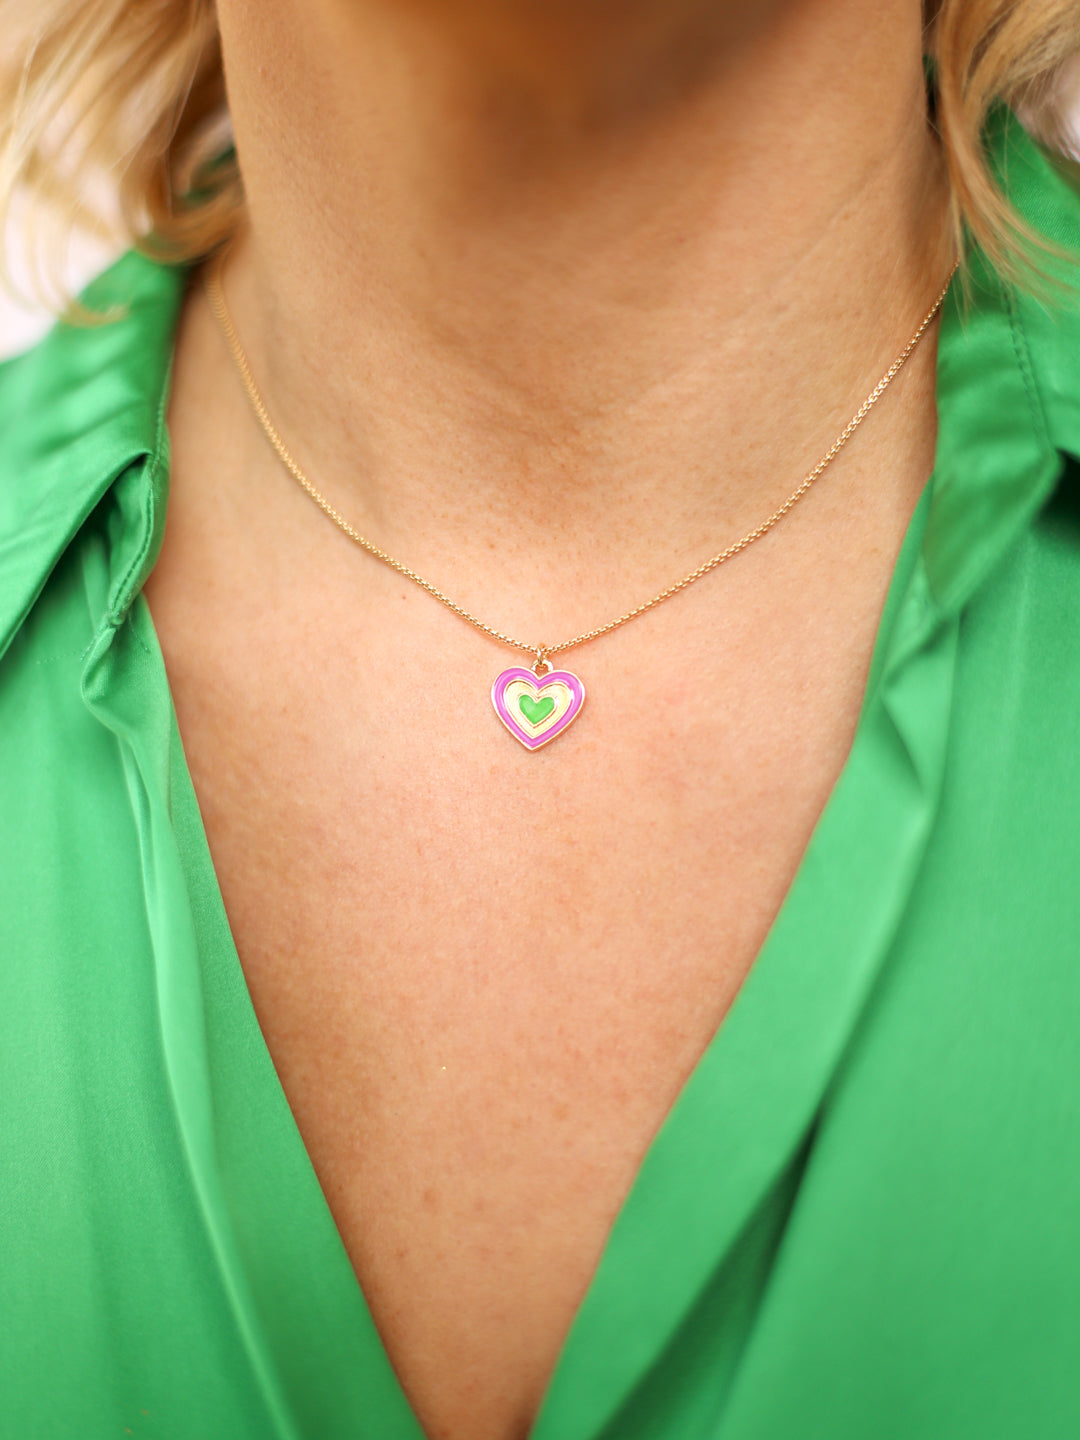 Mardi Gras heart necklace